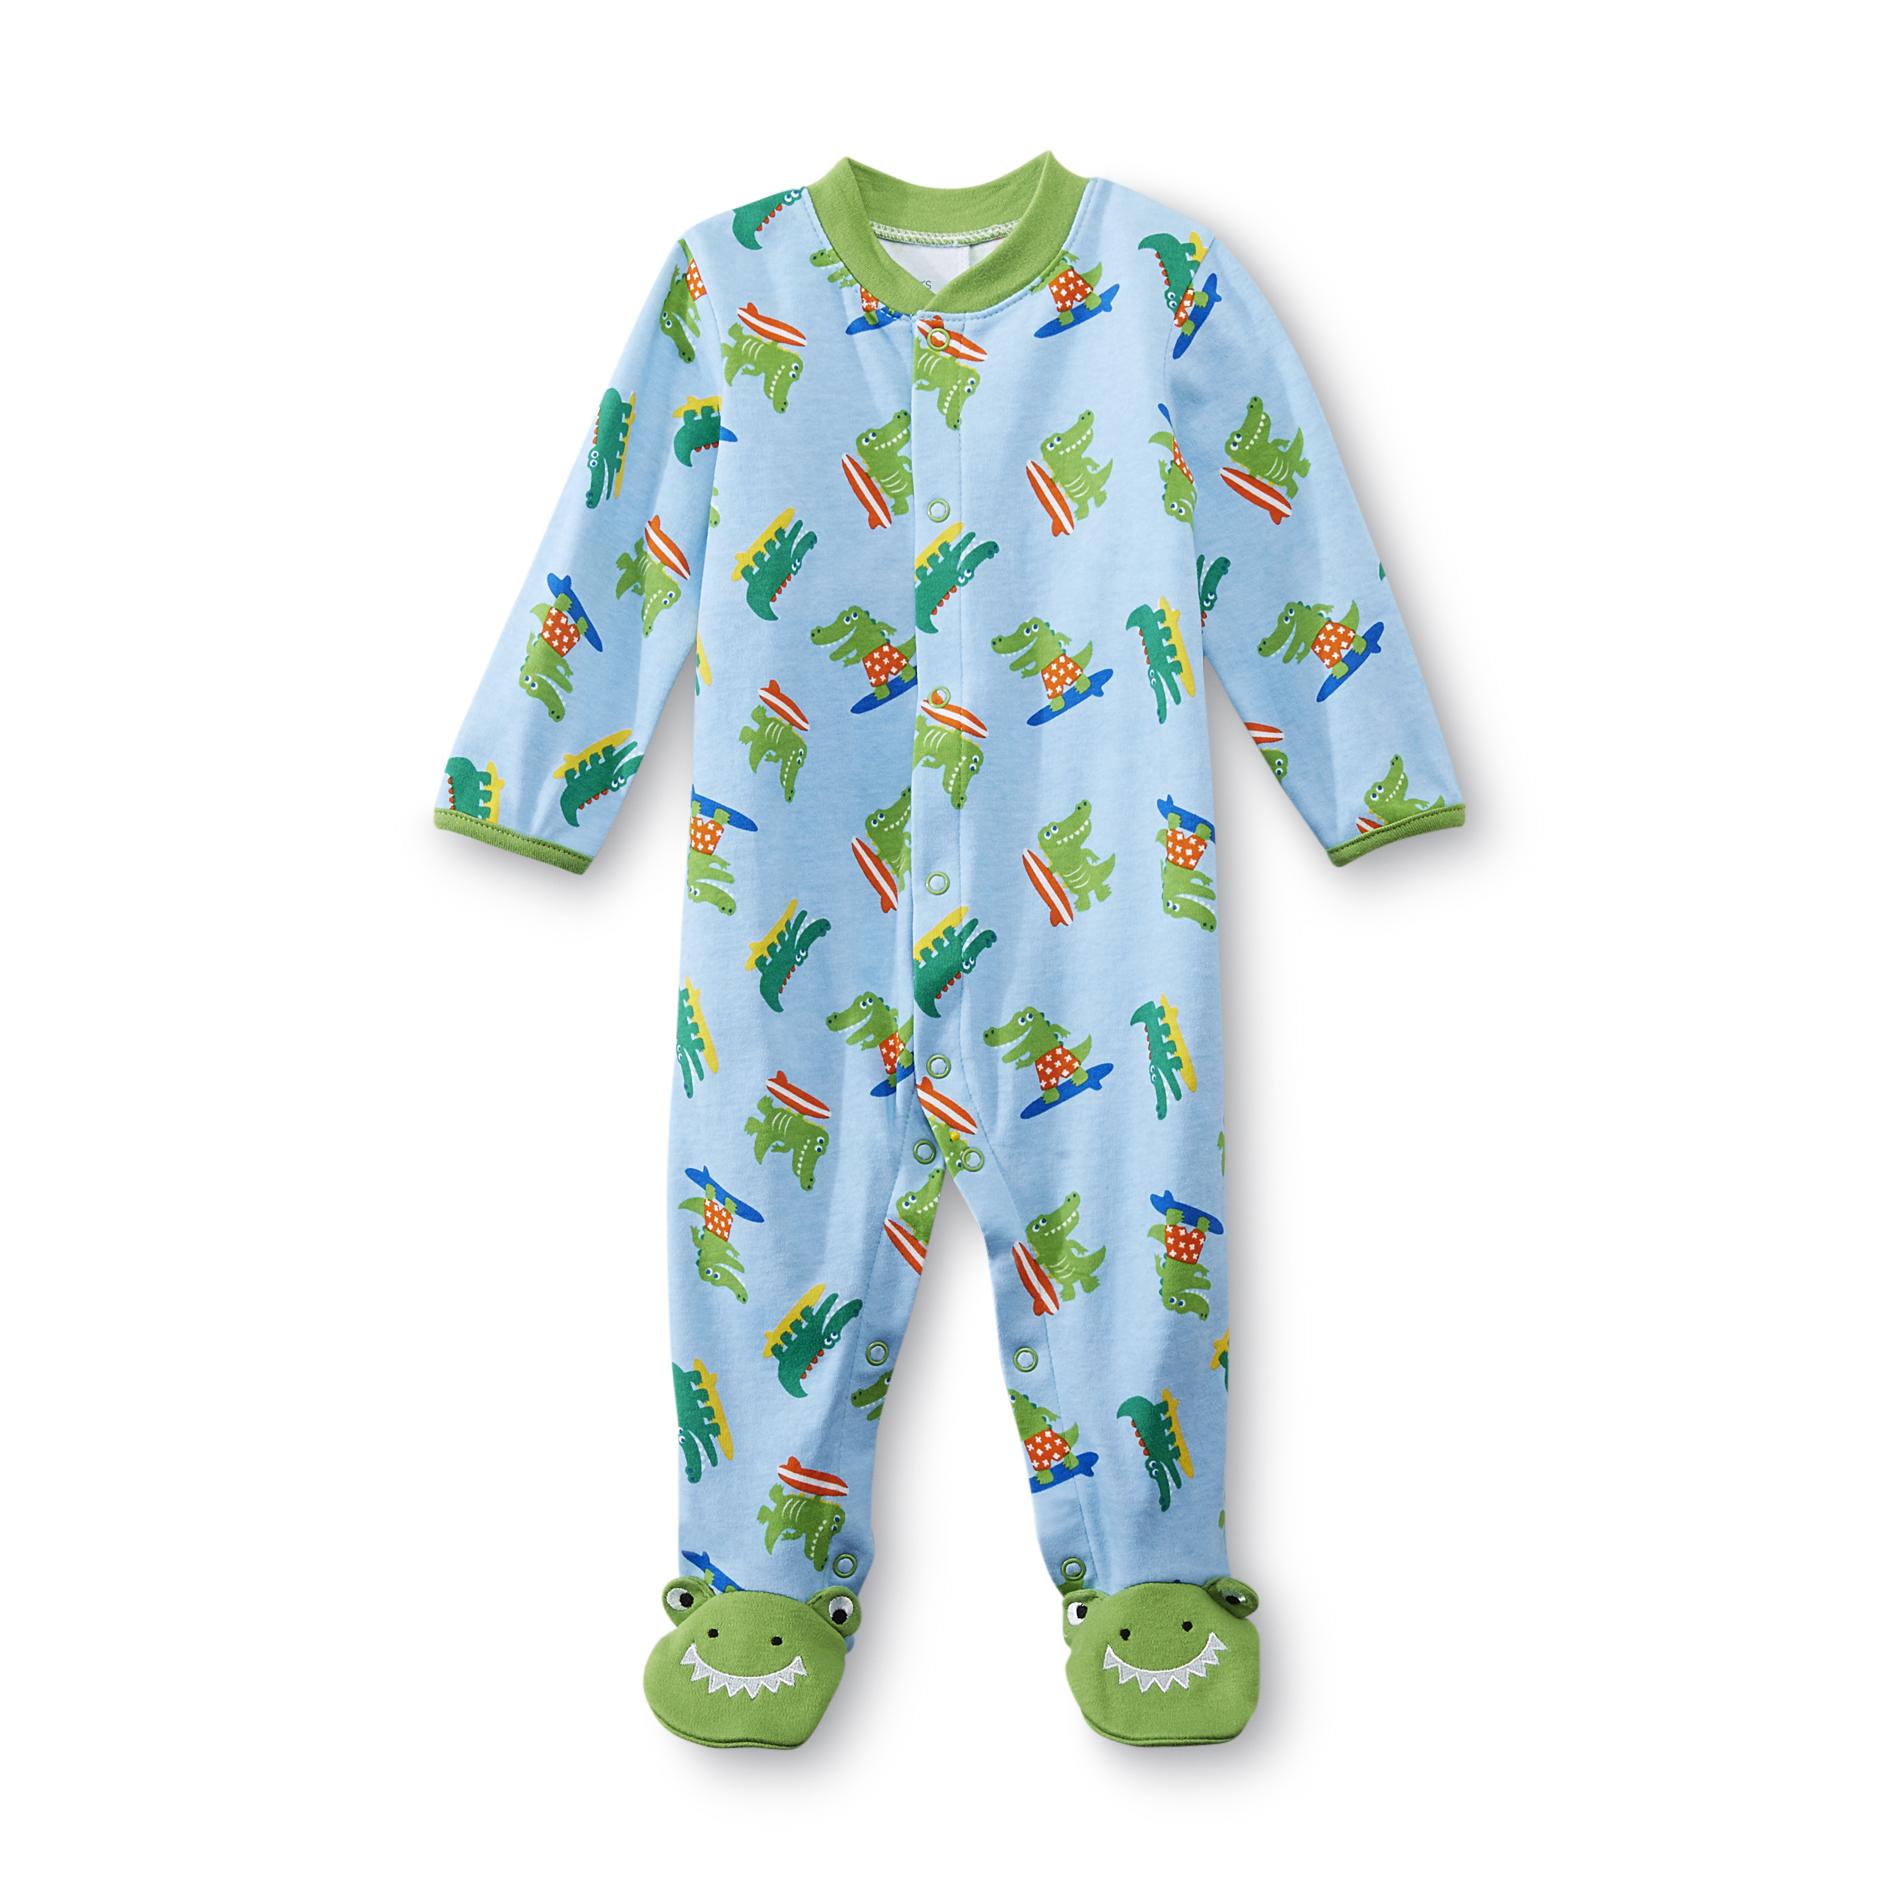 Little Wonders Newborn Boy's Footed Sleeper Pajamas - Surfing Alligator